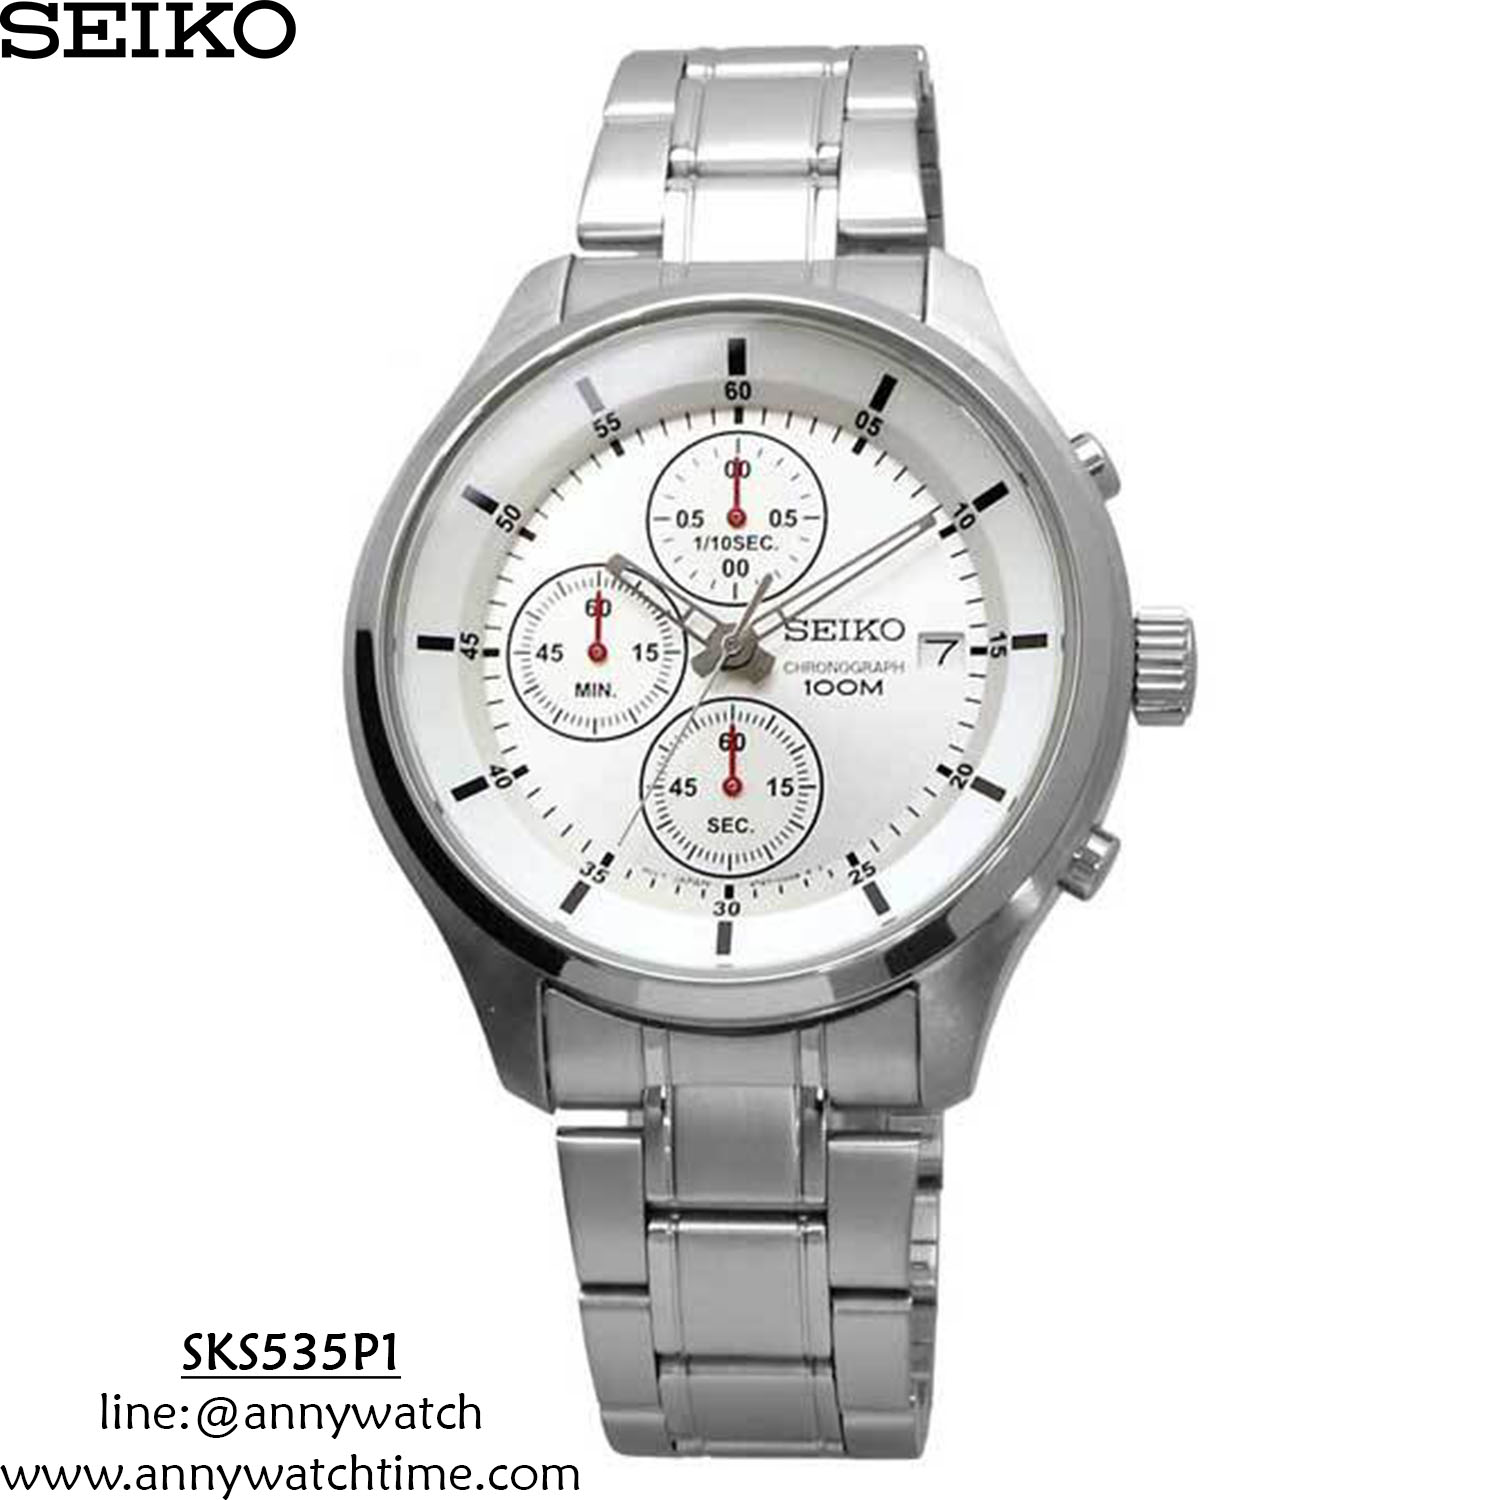 SEIKO SKS535P1 - จำหน่ายนาฬิกาของแท้ 100% อะไหล่นาฬิกา ชุดซ่อมนาฬิกาครบวงจร  : Inspired by 